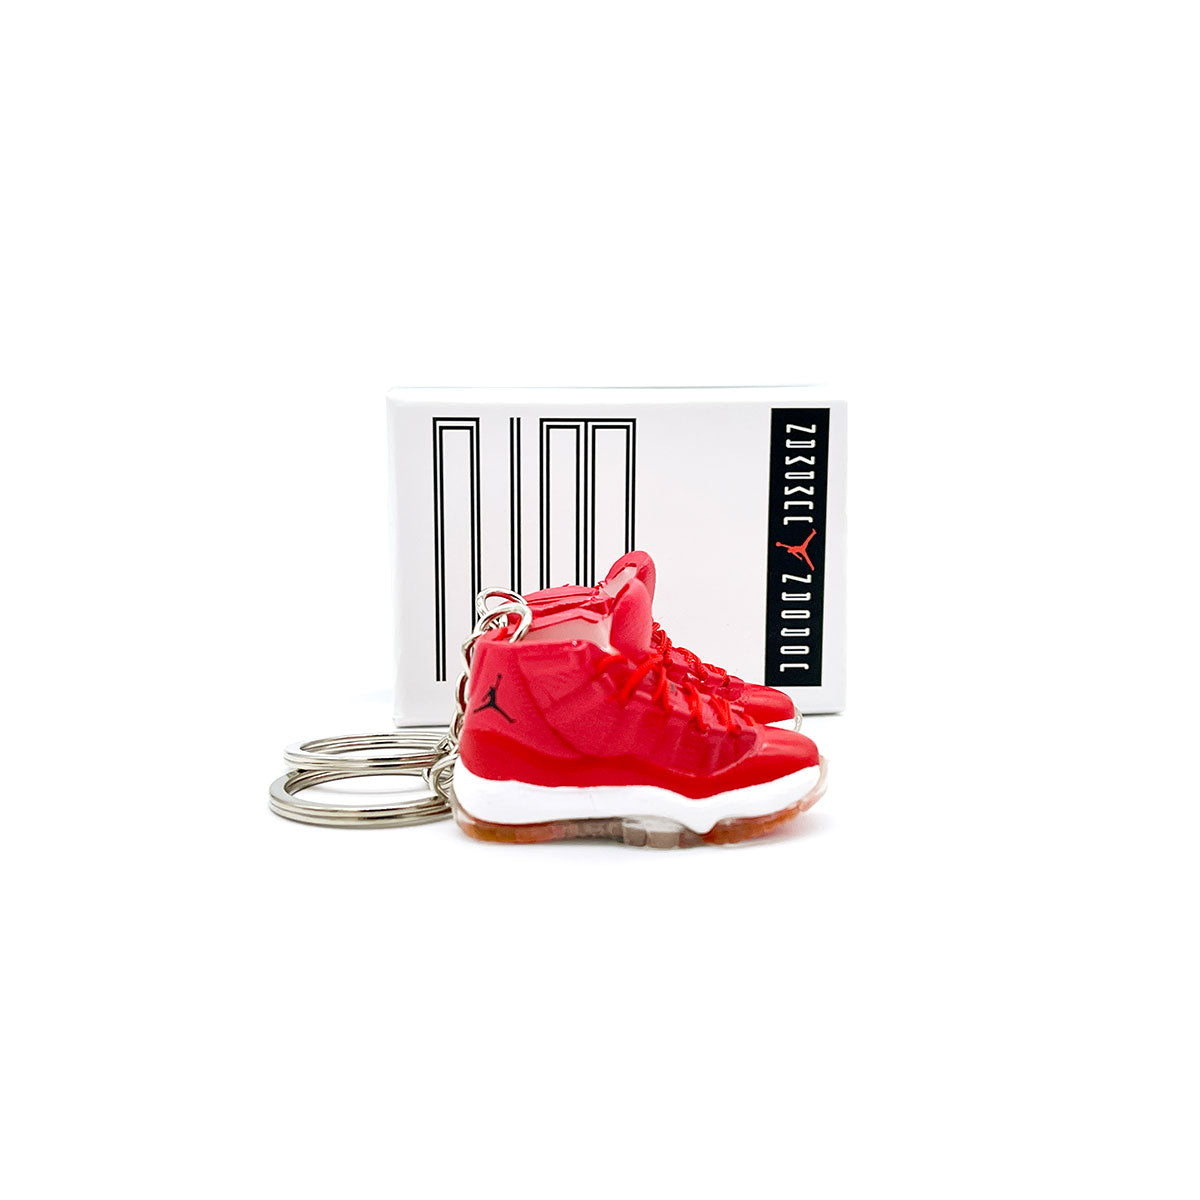 3D Sneaker Keychain- Air Jordan 11 Win Like 96 Pair